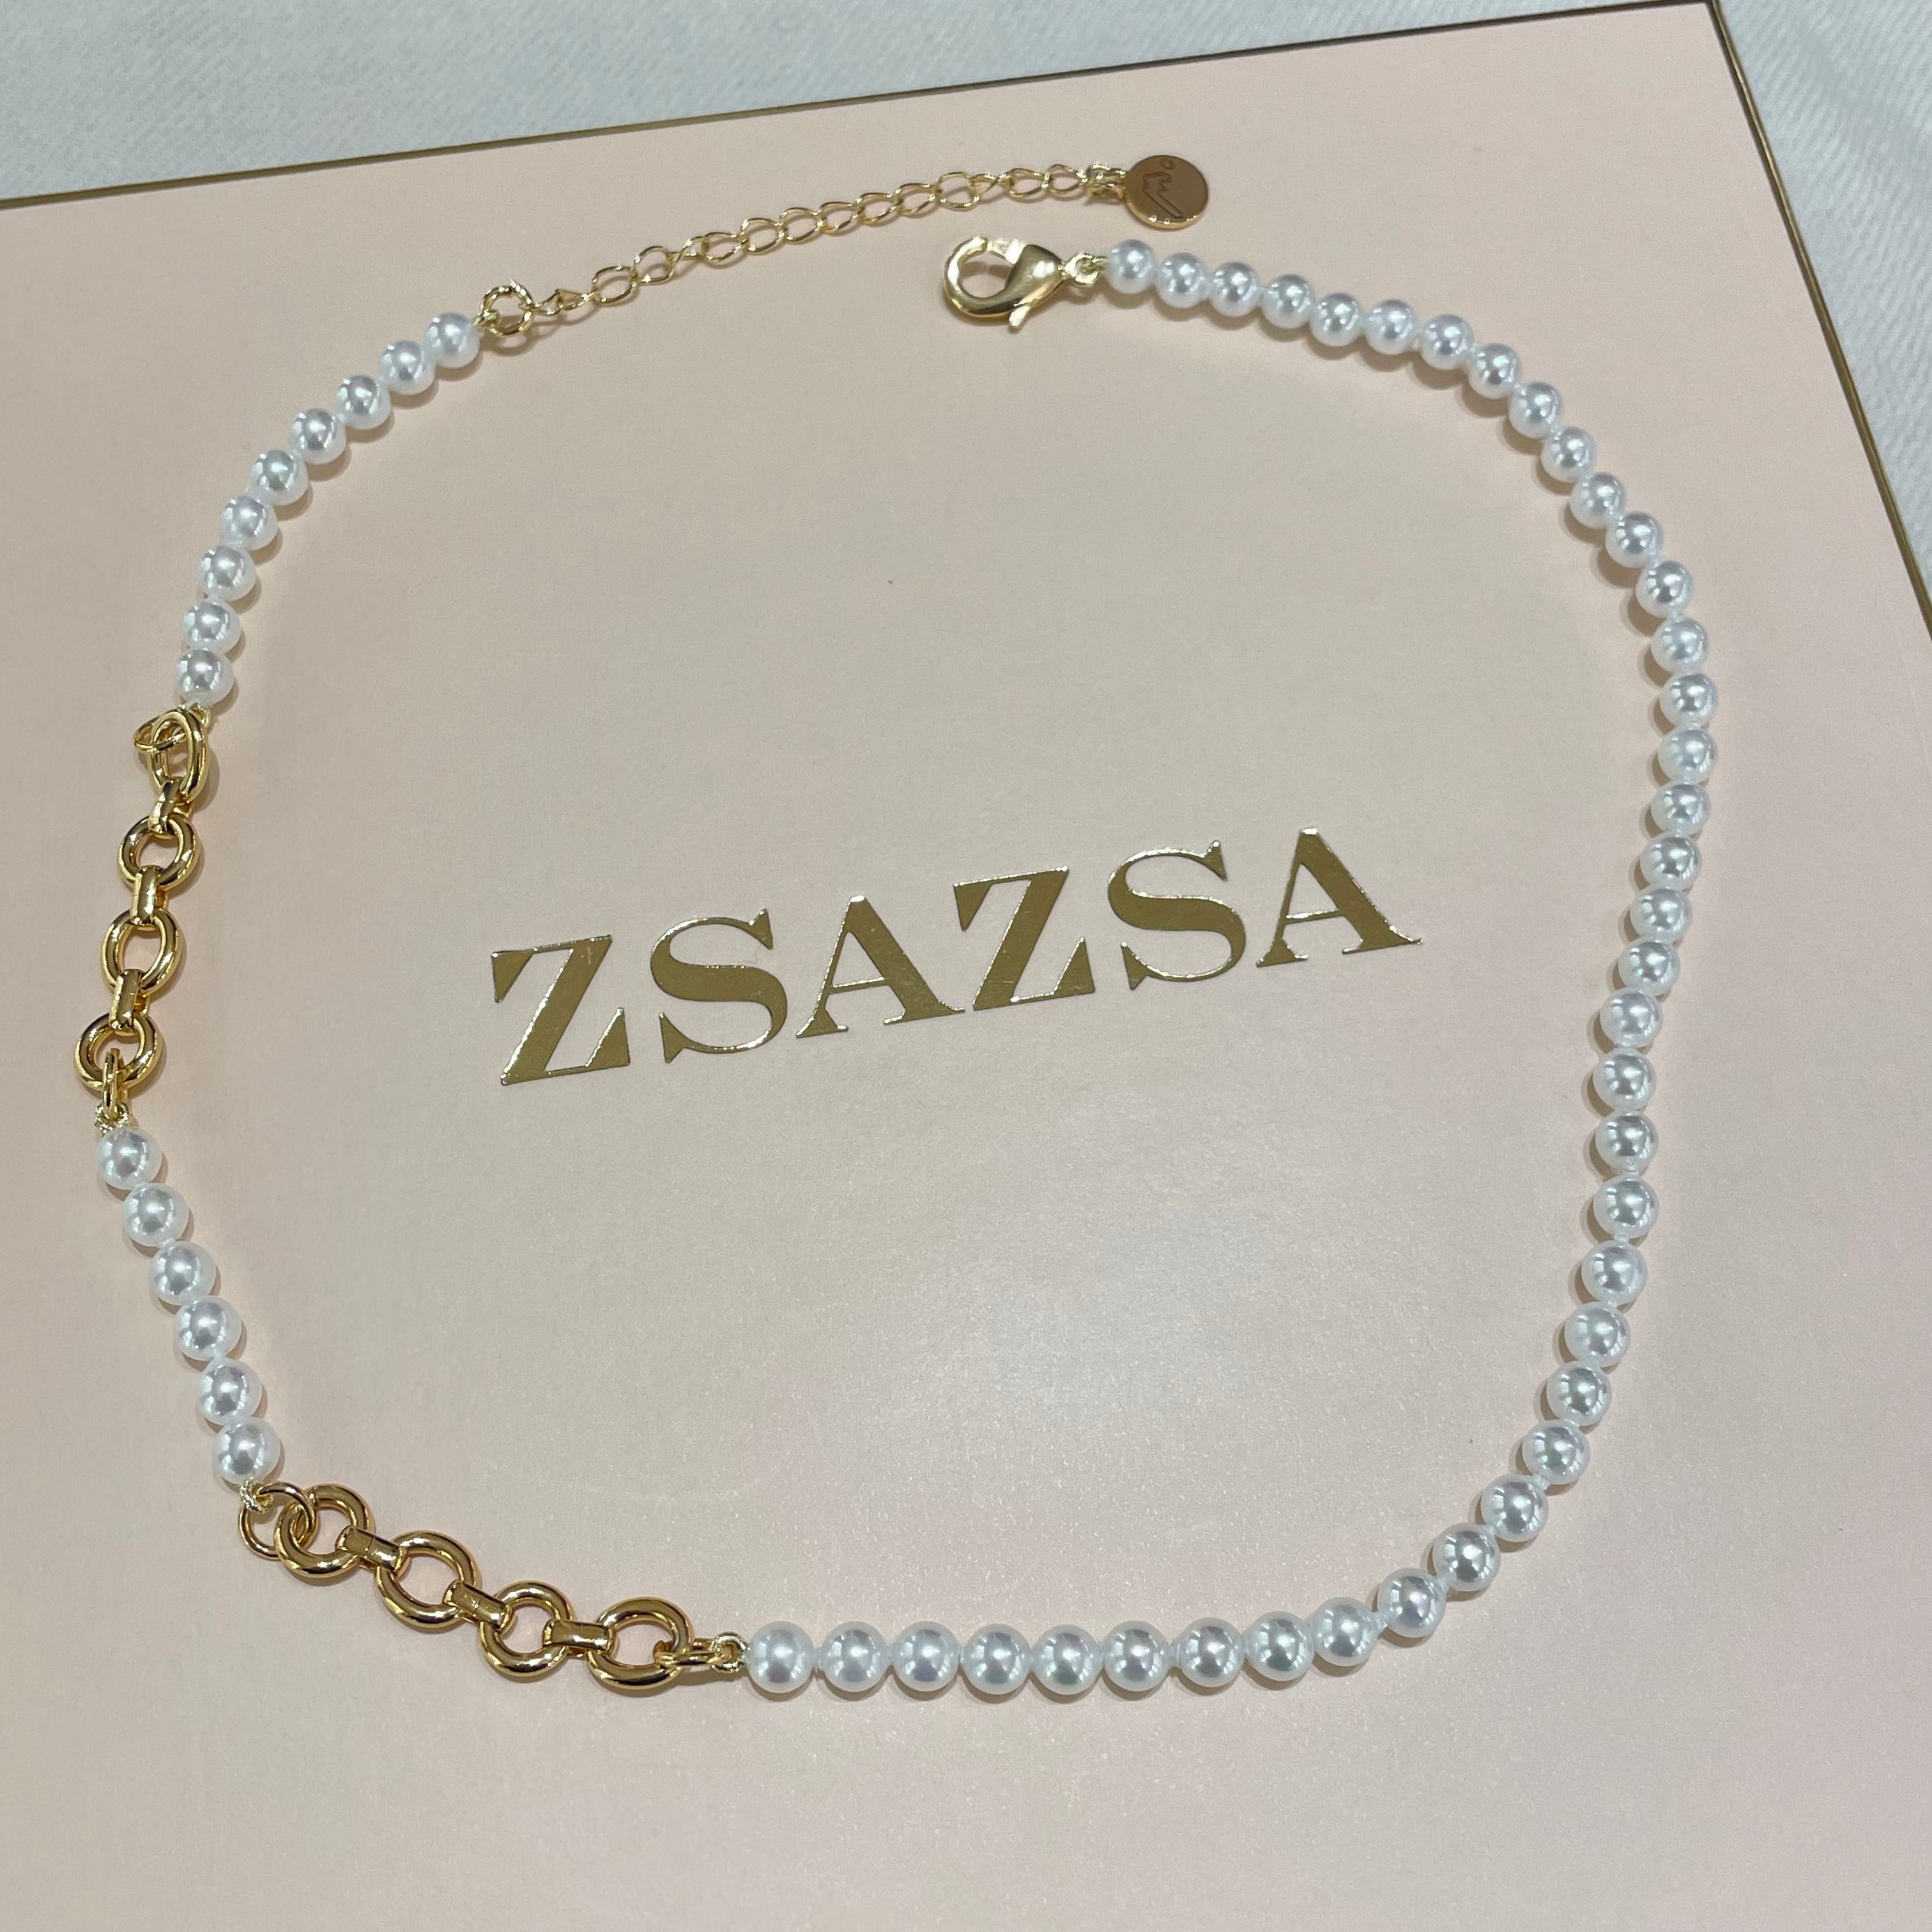 Mallorca pearls necklace